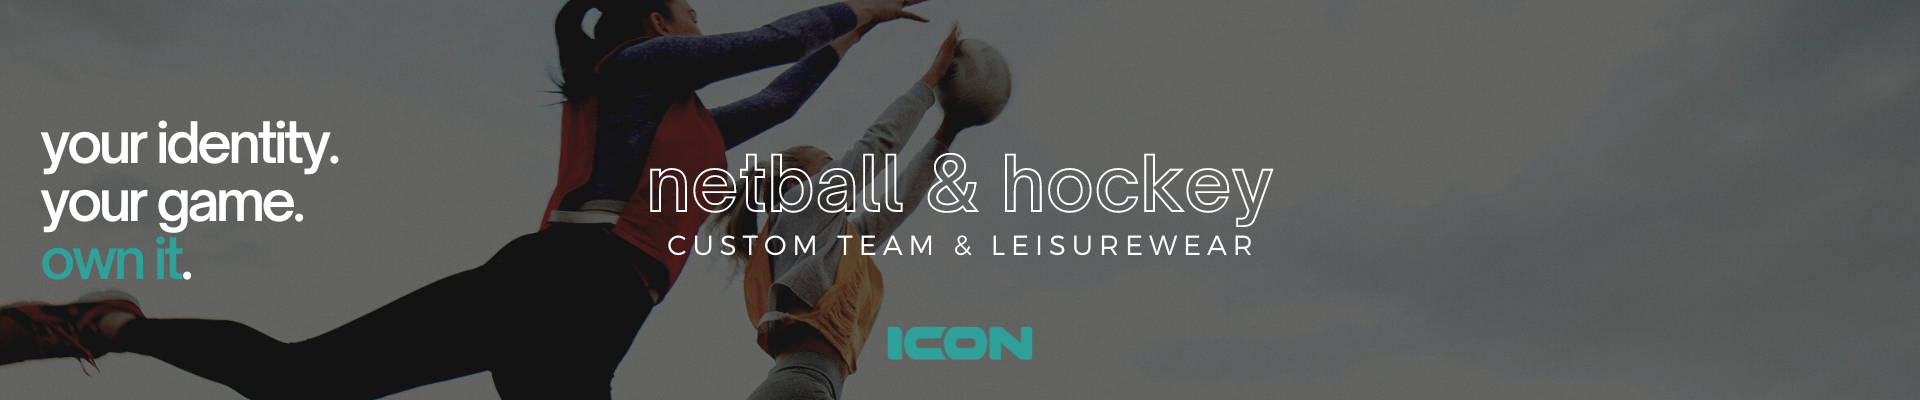 2023-Web-custom-netball-custom-hockey-teamwear-Banners.png